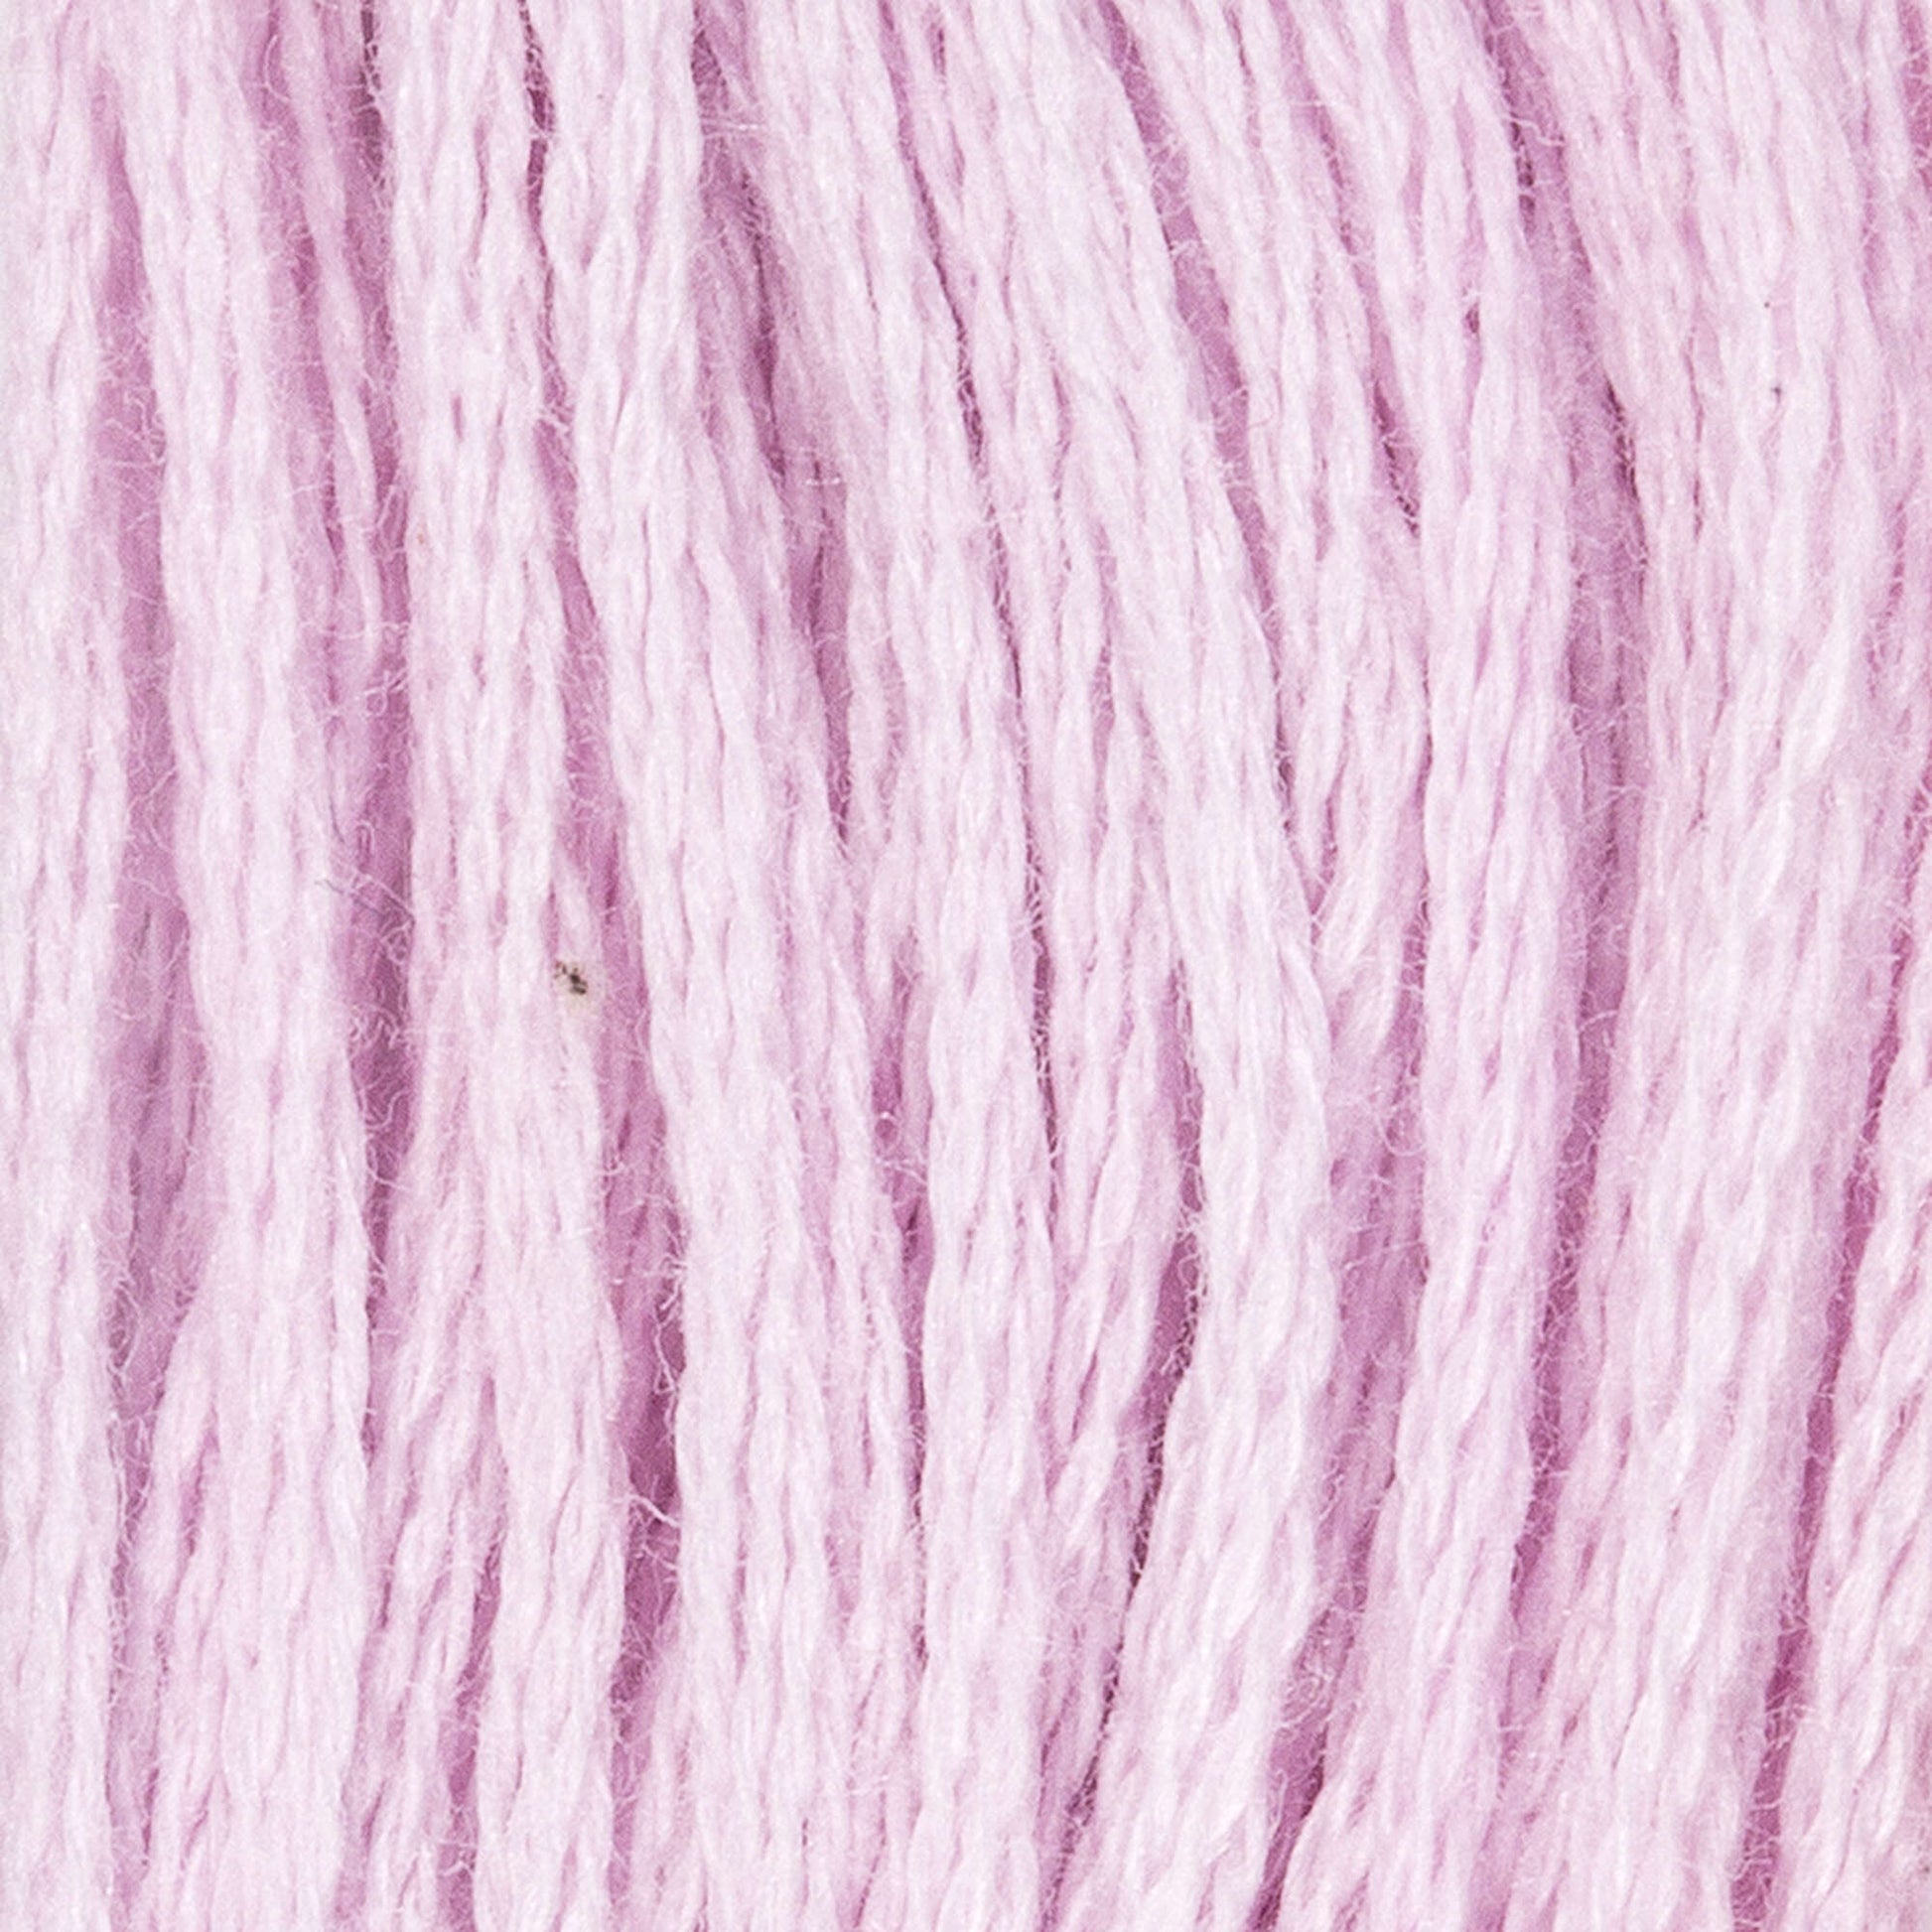 Coats & Clark Cotton Embroidery Floss Violet Very Dark